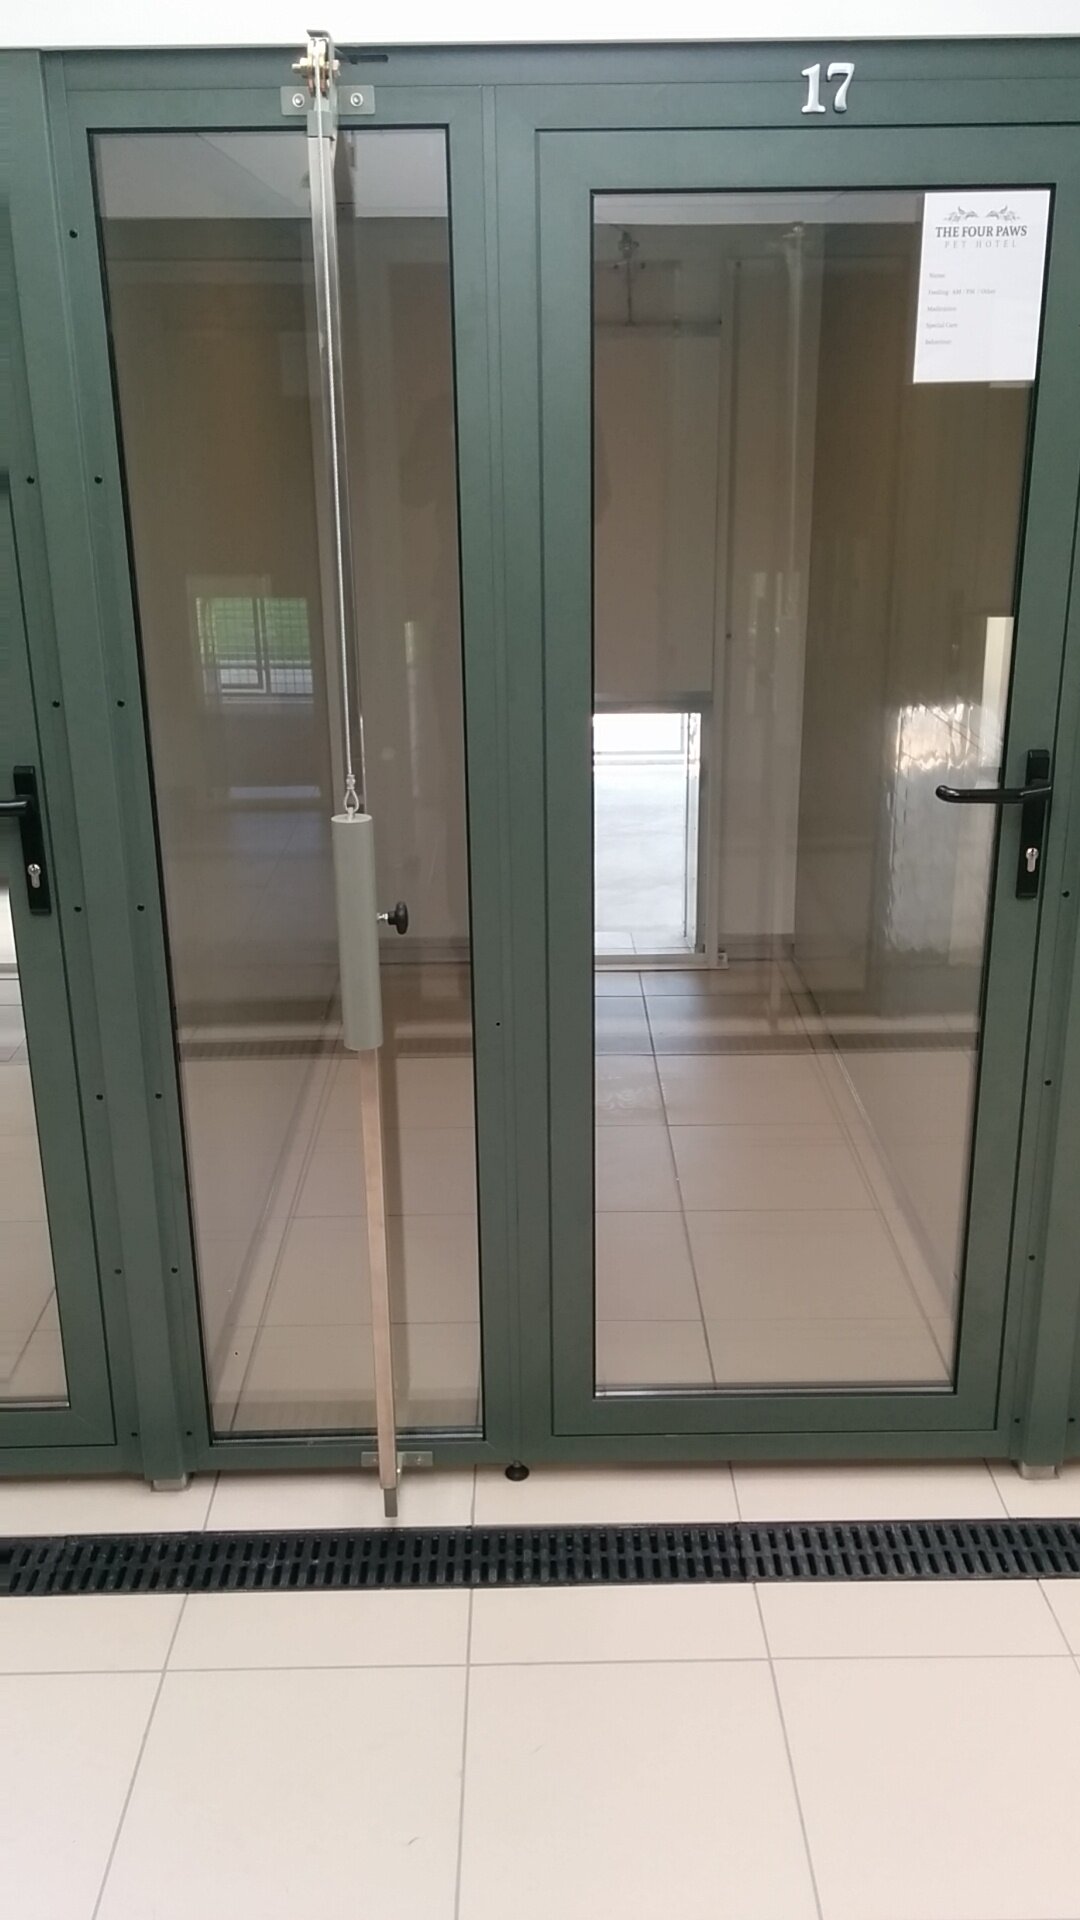  Kennelbuild System glass-fronted doors